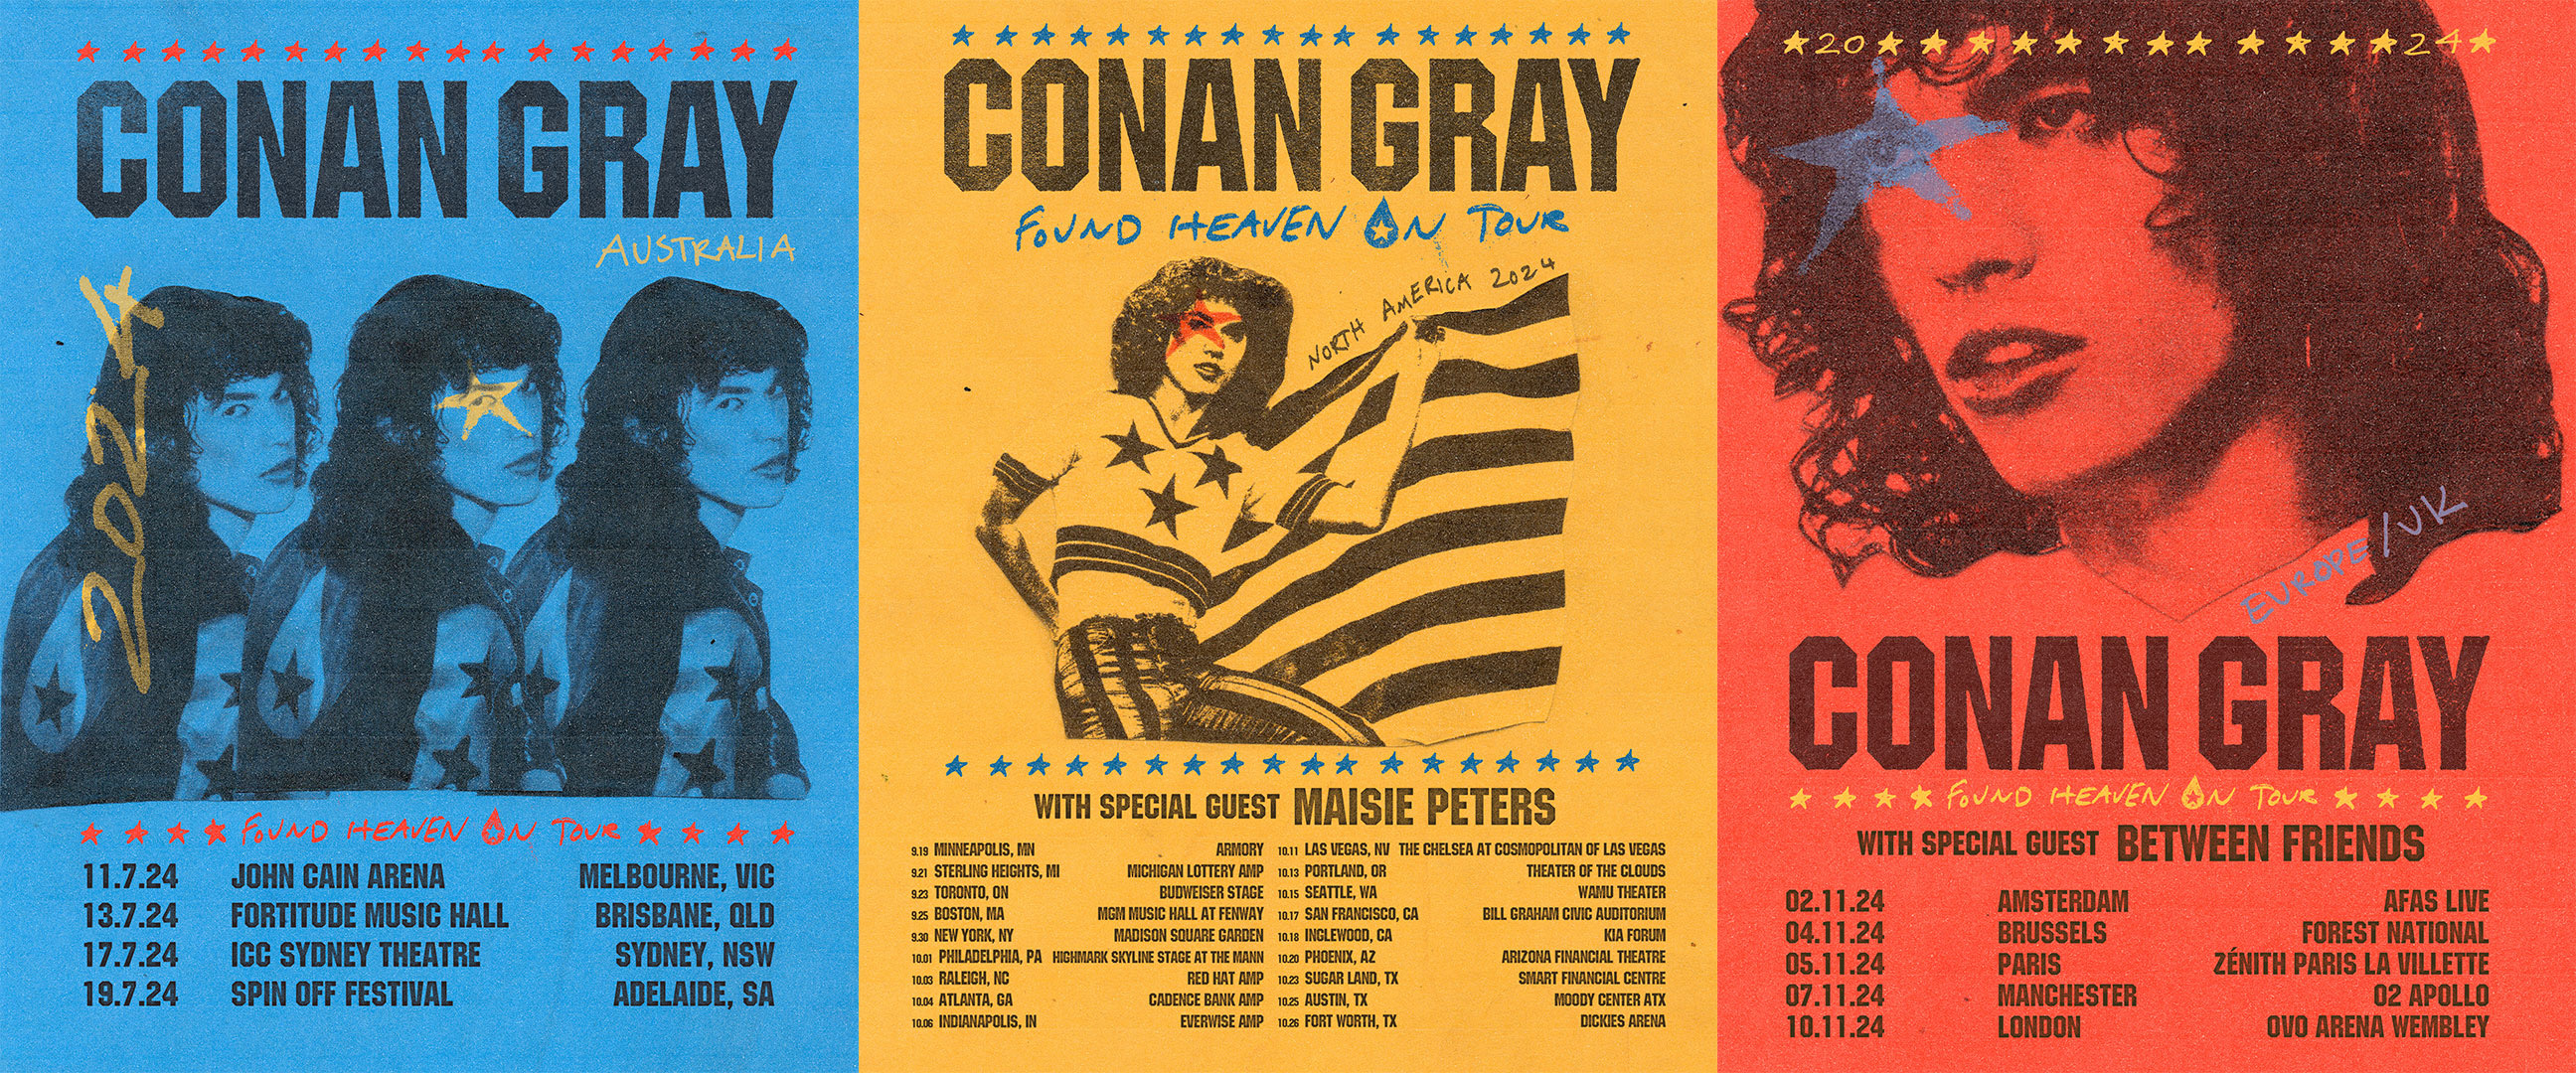 Conan Gray Found Heaven On Tour poster